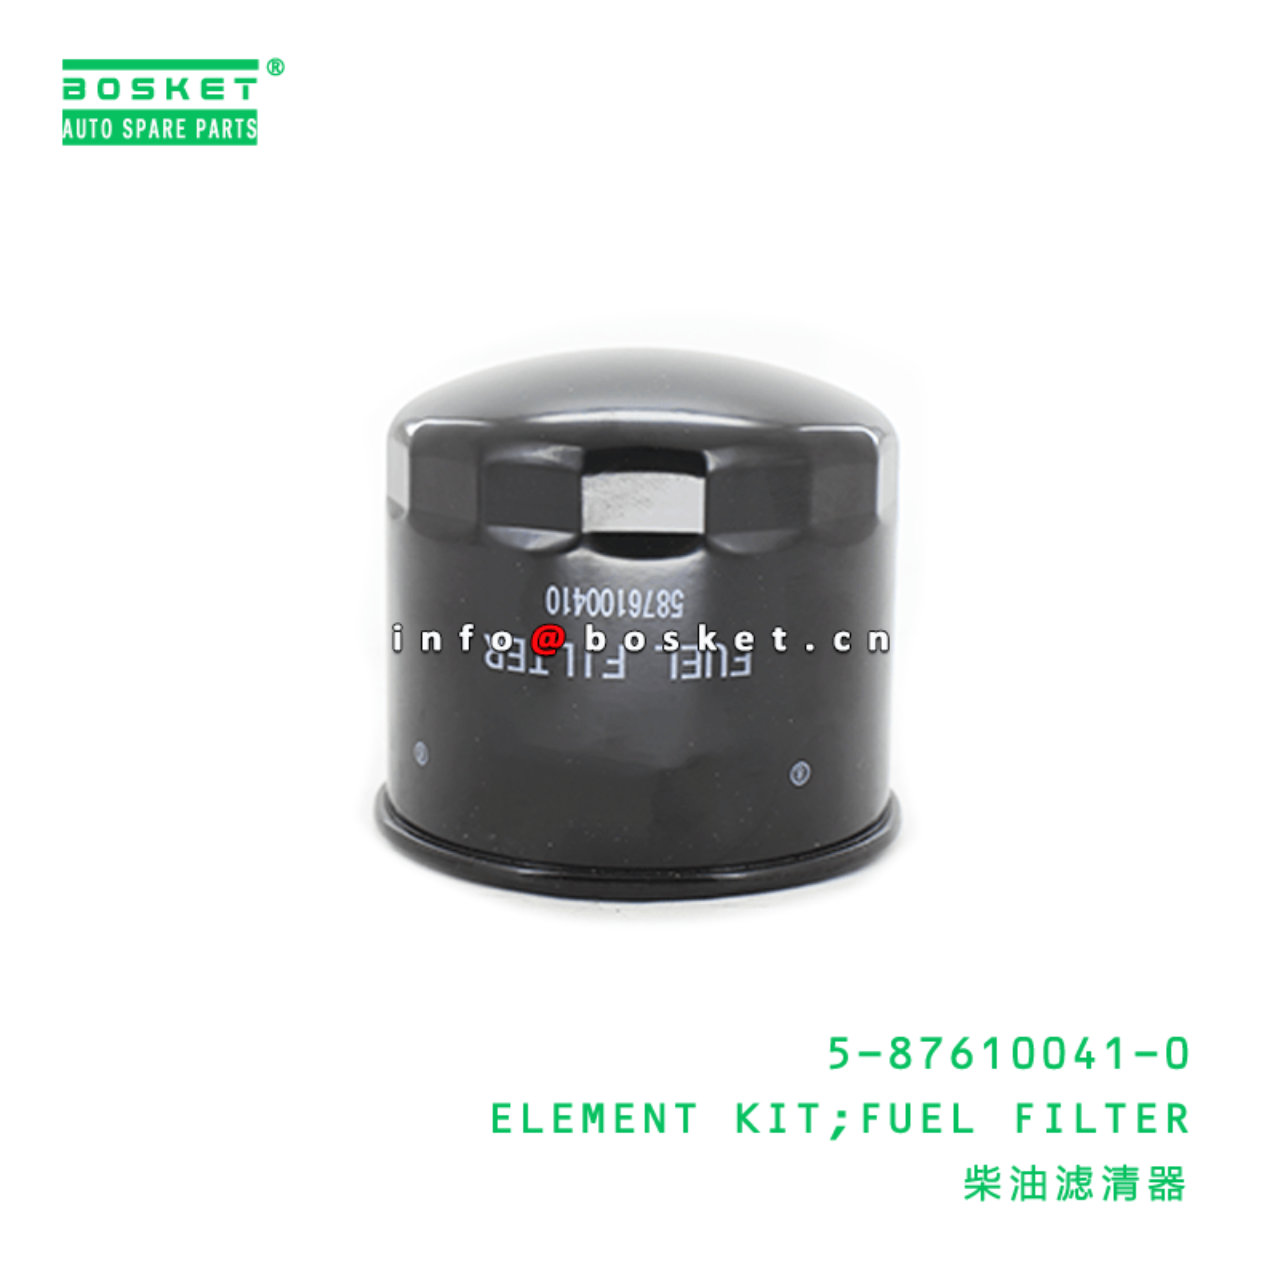 5-87610041-0 Fuel Filter Element Kit Suitable for ISUZU NKR55 4BG1 5876100410